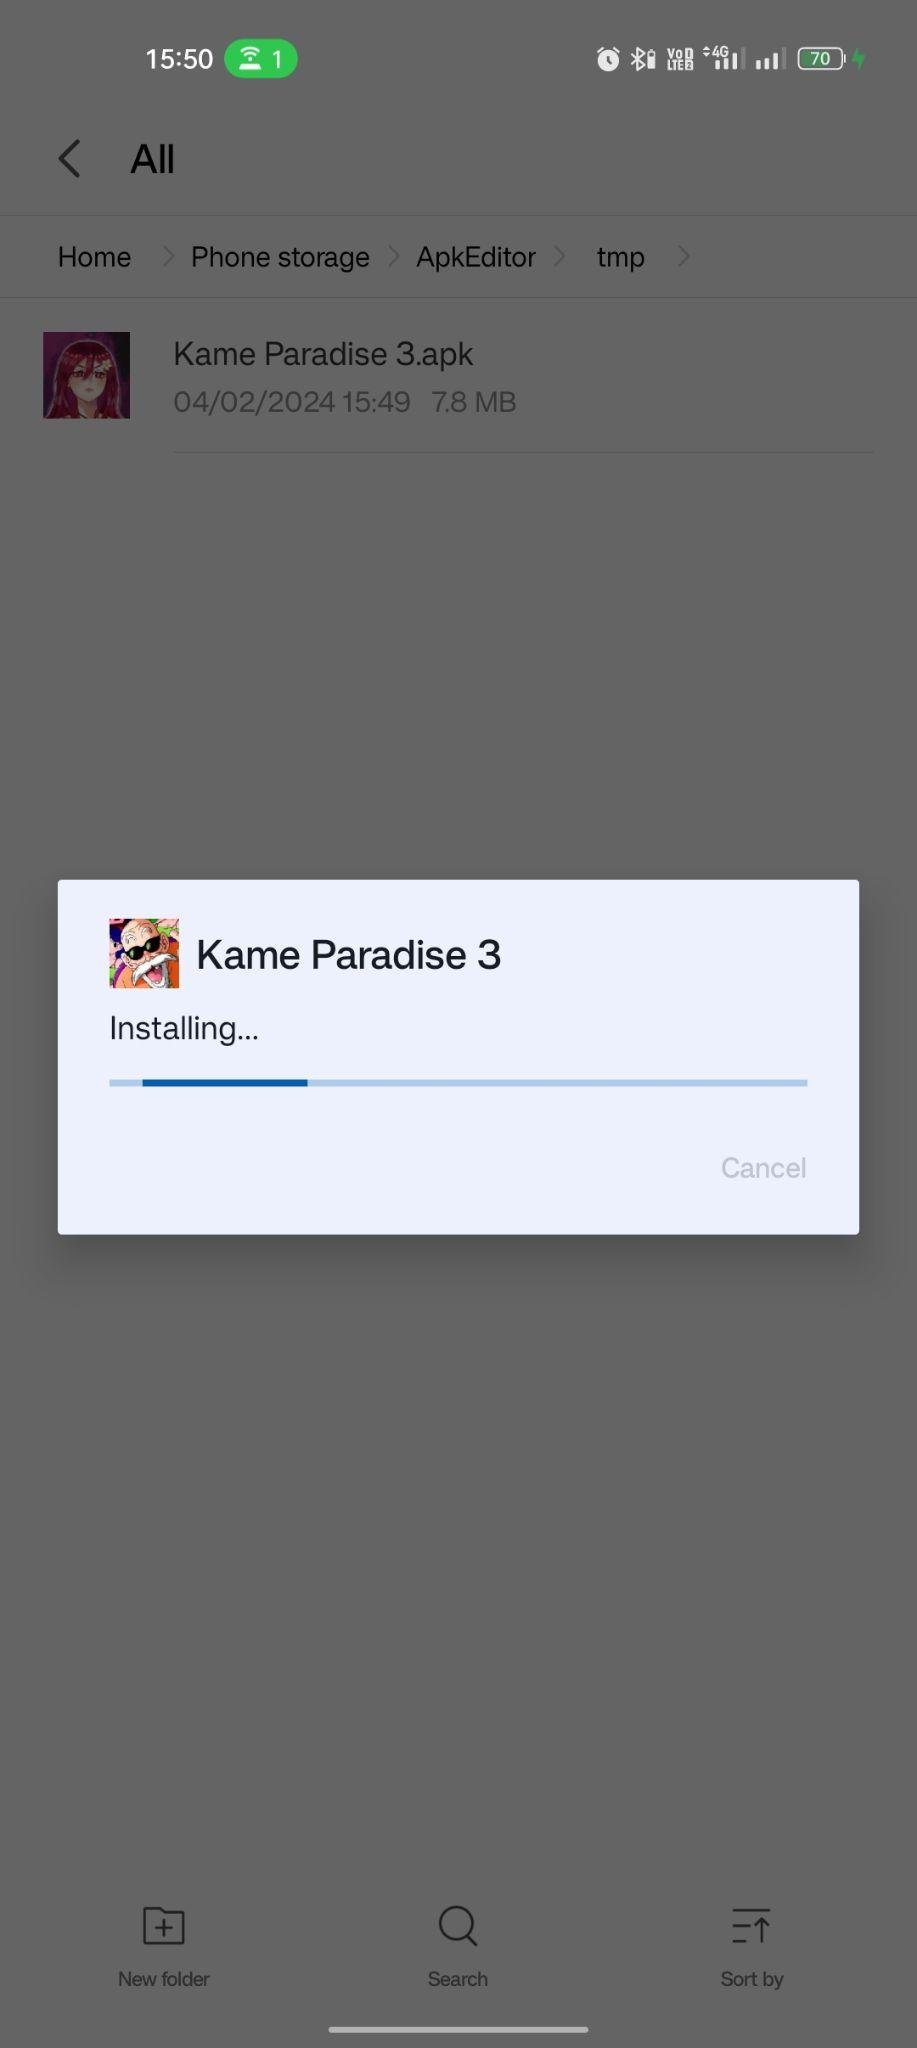 Kame Paradise 3 apk installing